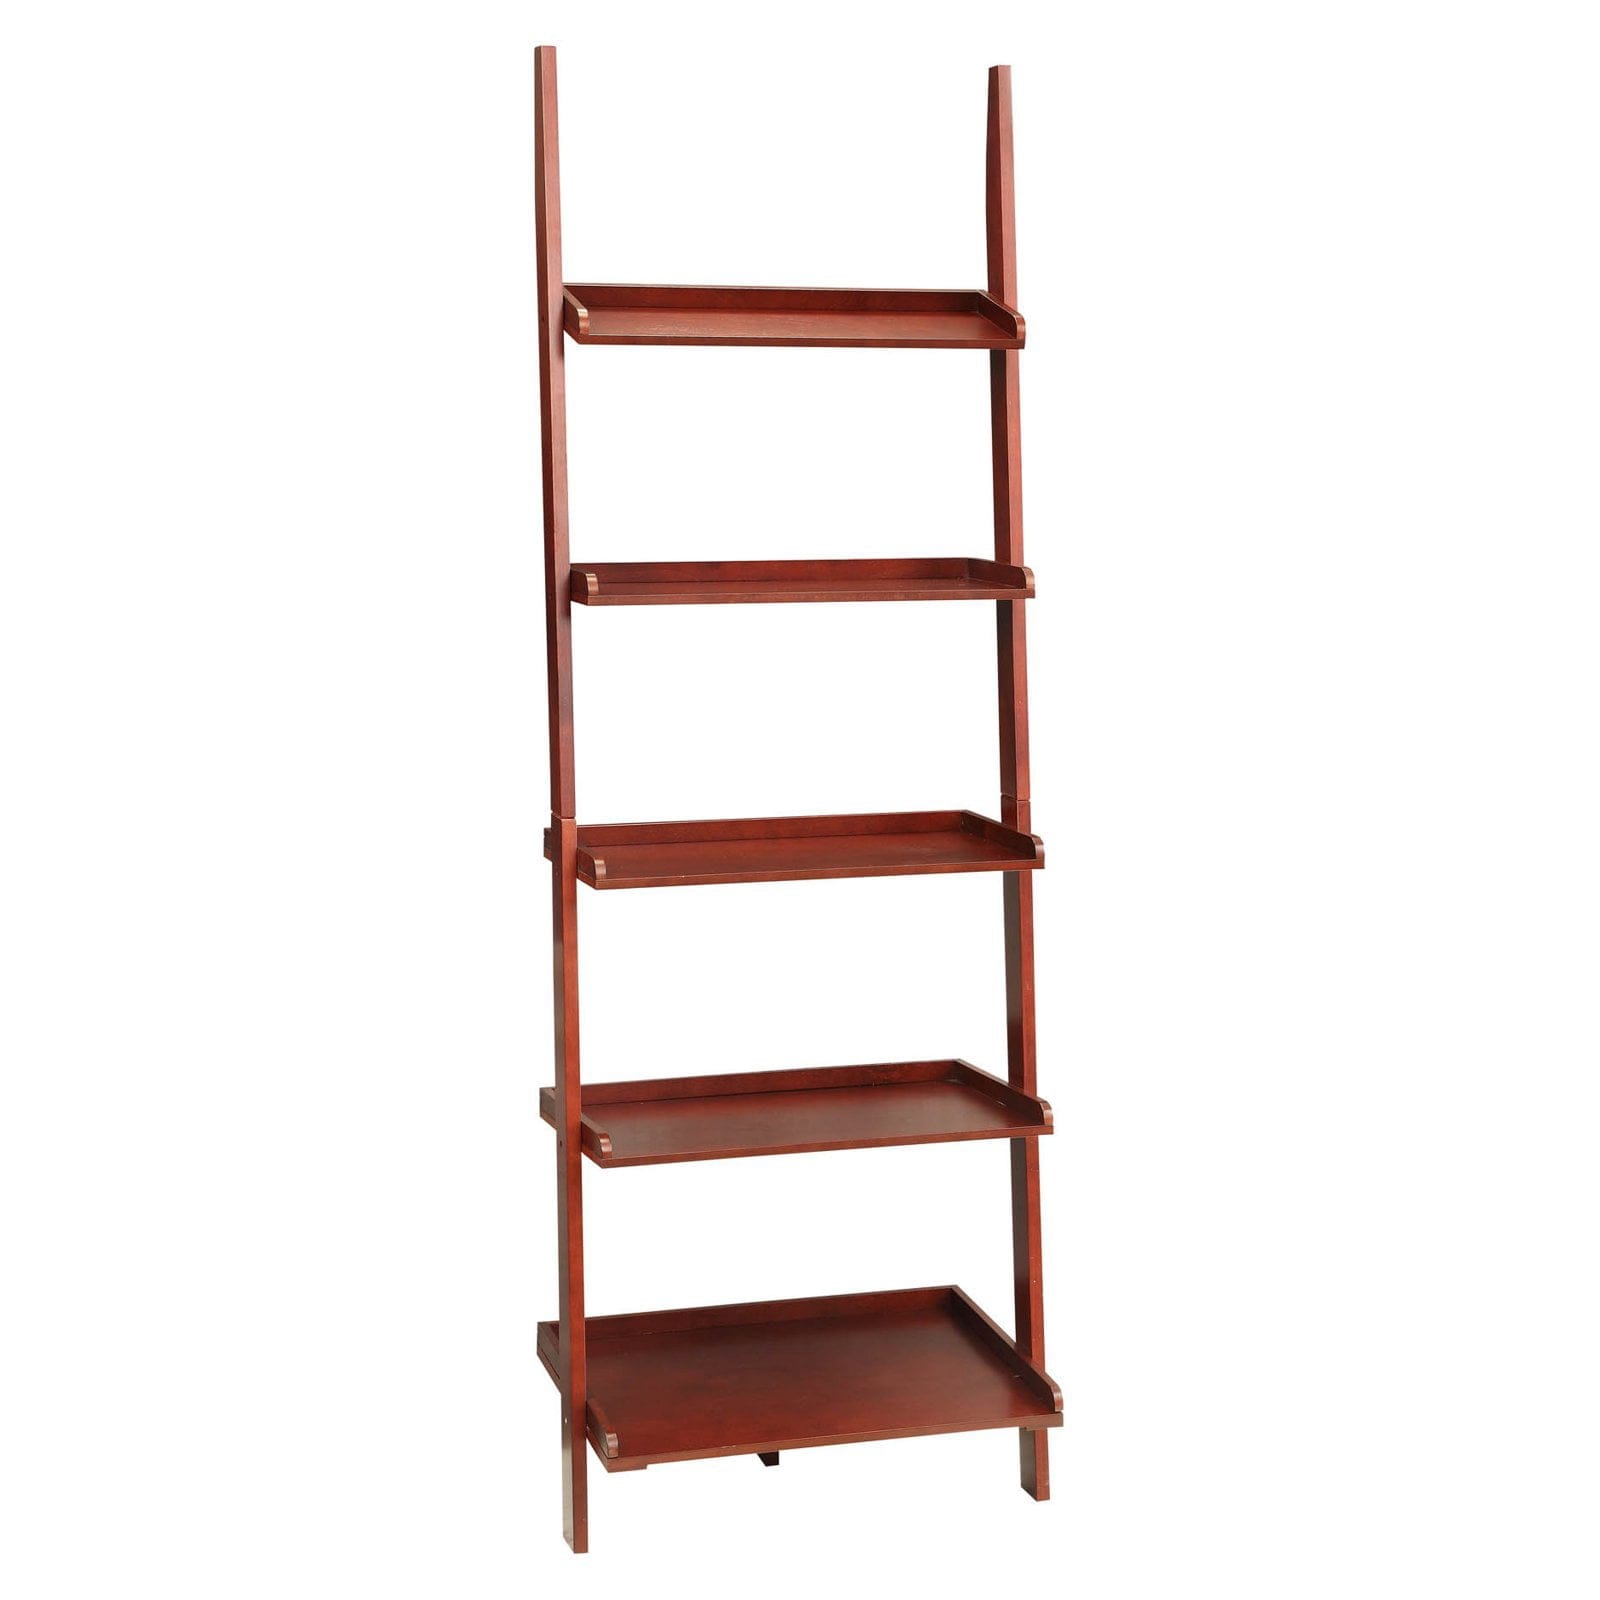 French Country Bookshelf Ladder, Dark Walnut / Black